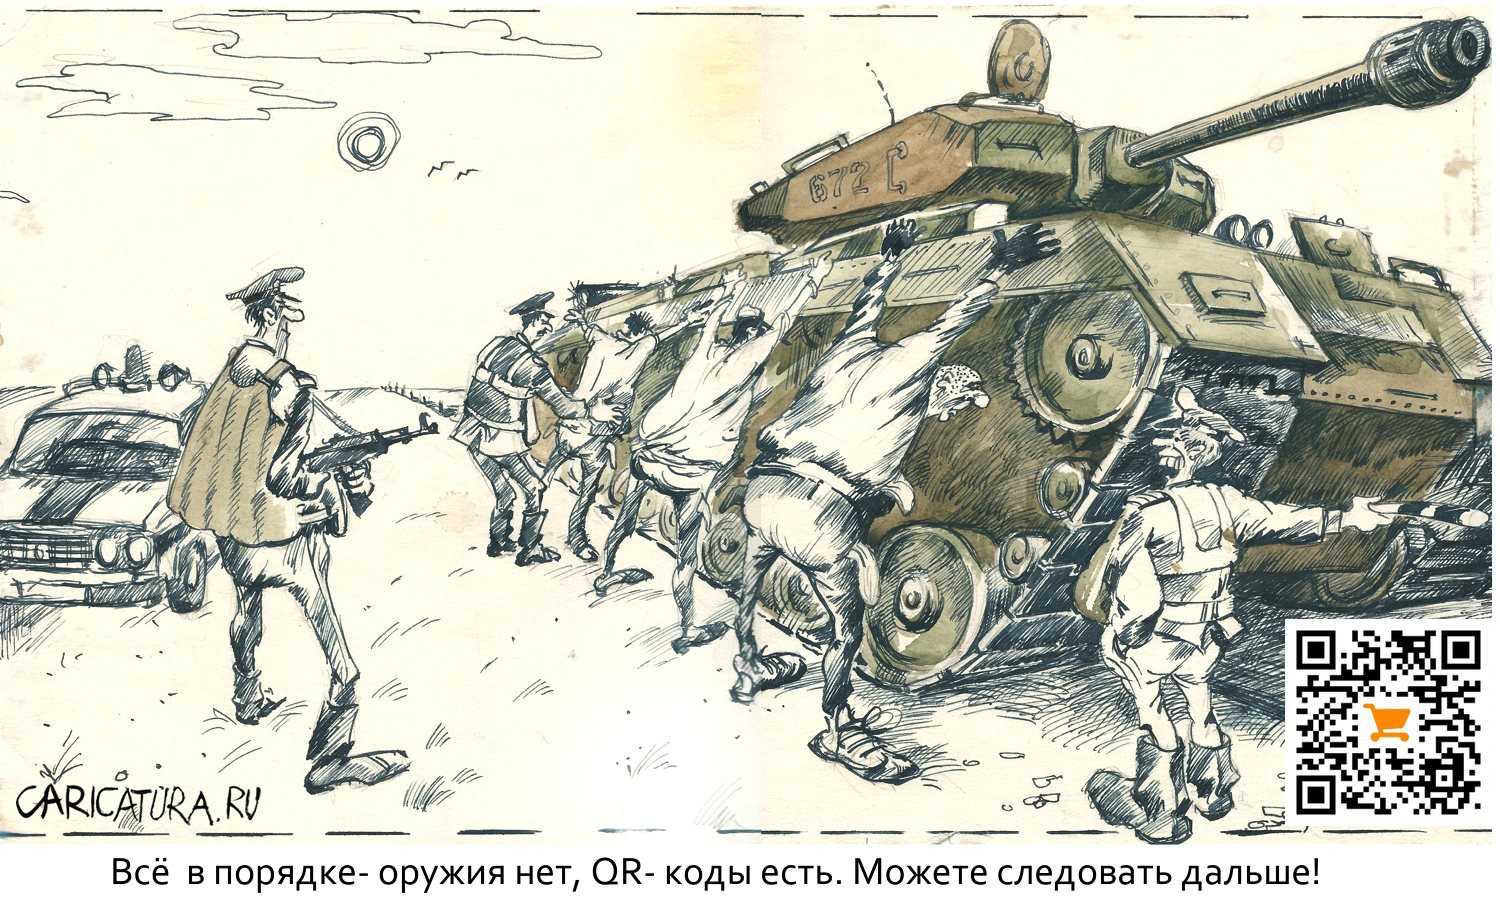 Карикатура "Проверка", Александр Шульпинов